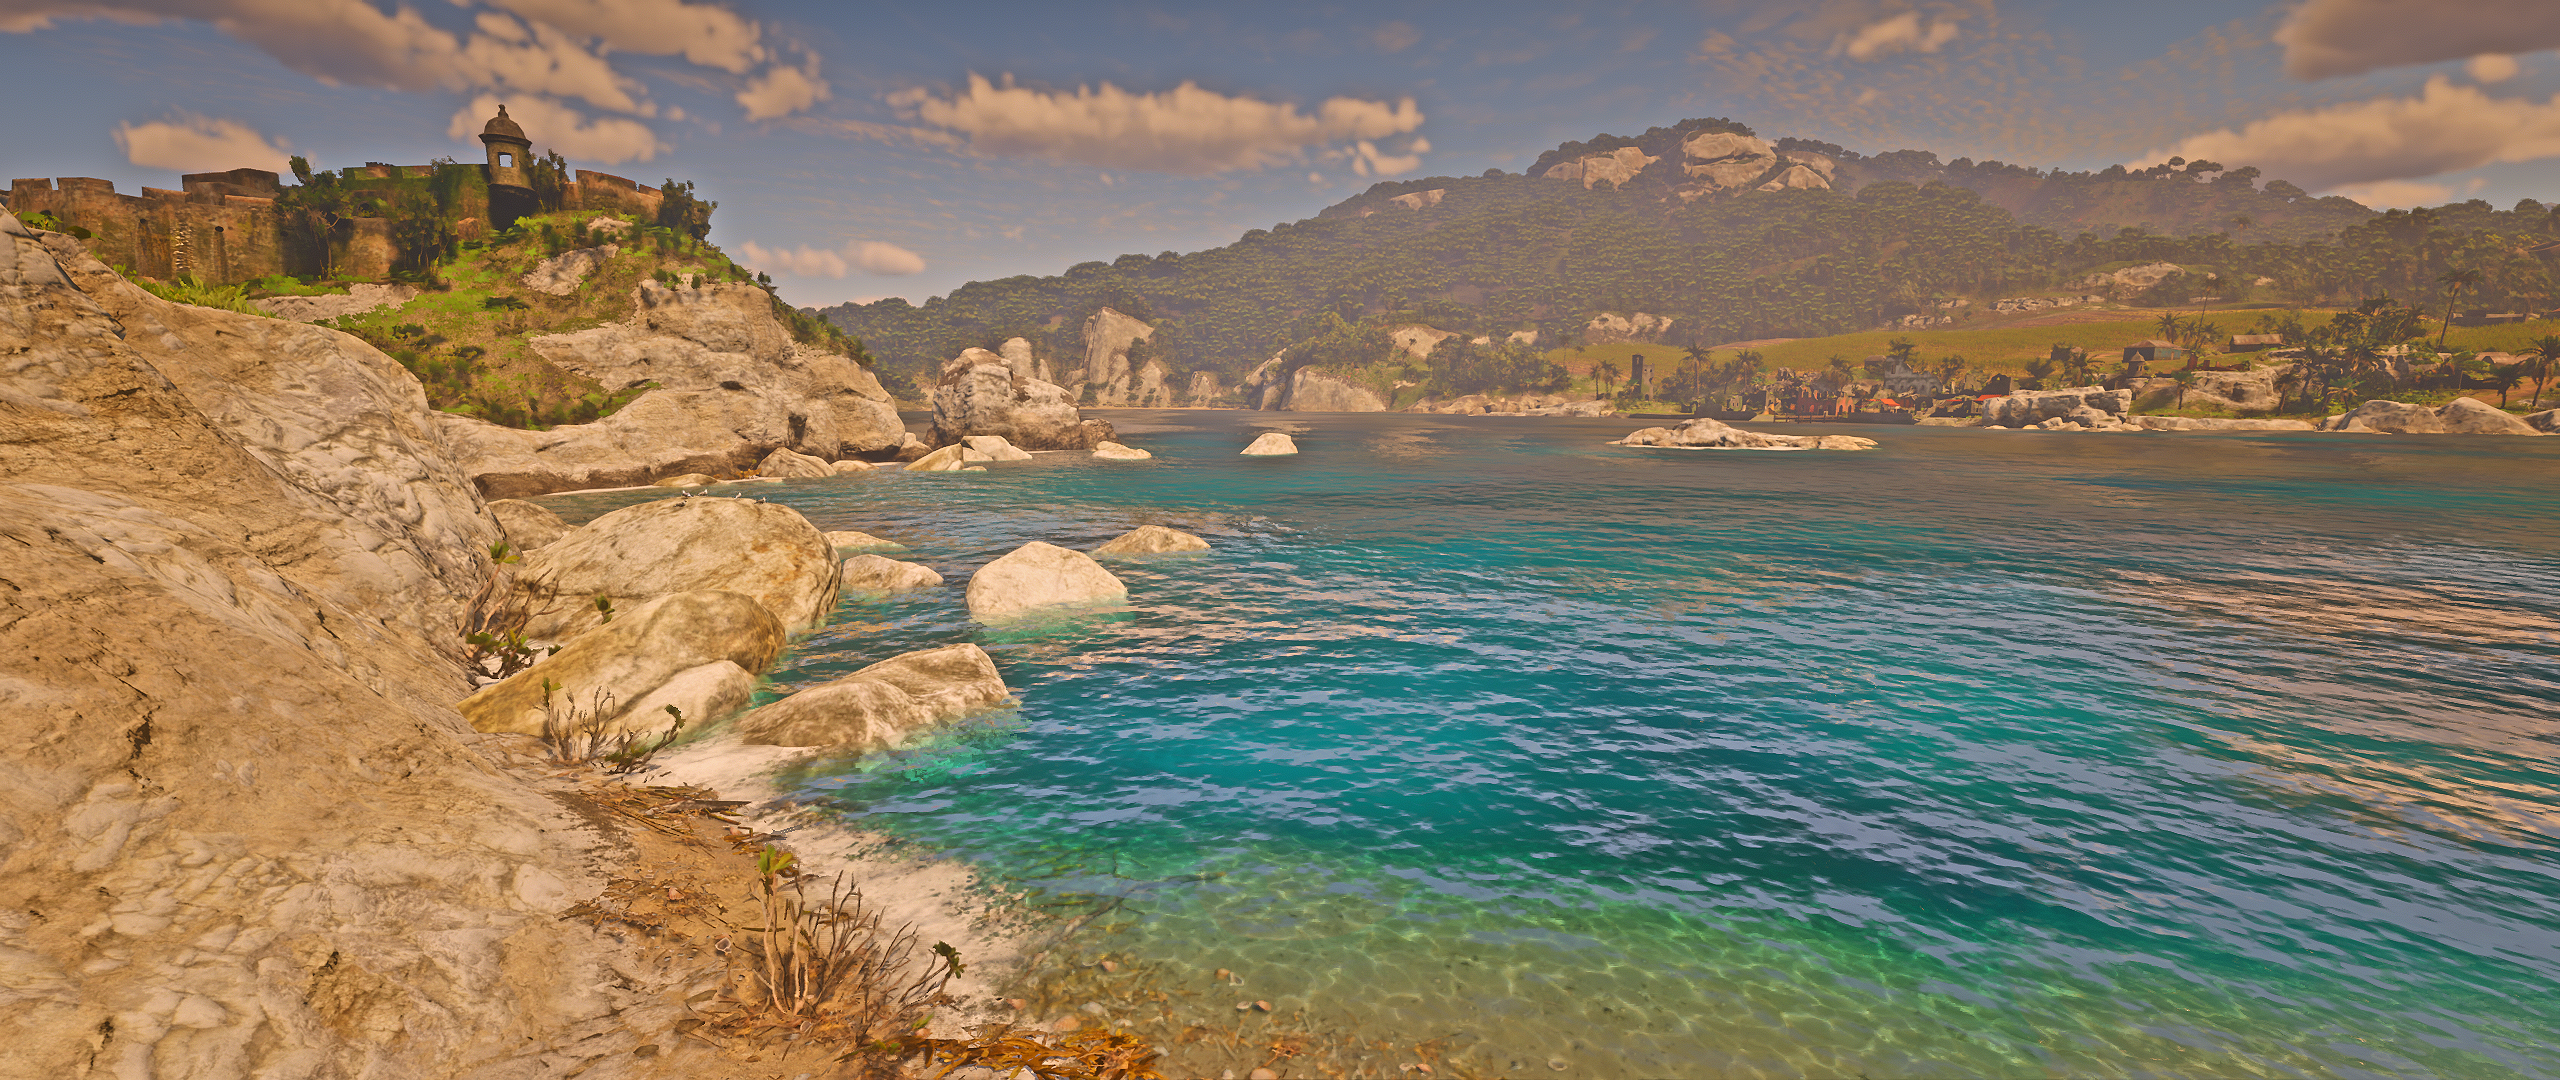 Red Dead Redemption 2 Rockstar Games Video Games Nature Landscape Sea Foam CGi Water Rocks 2560x1080